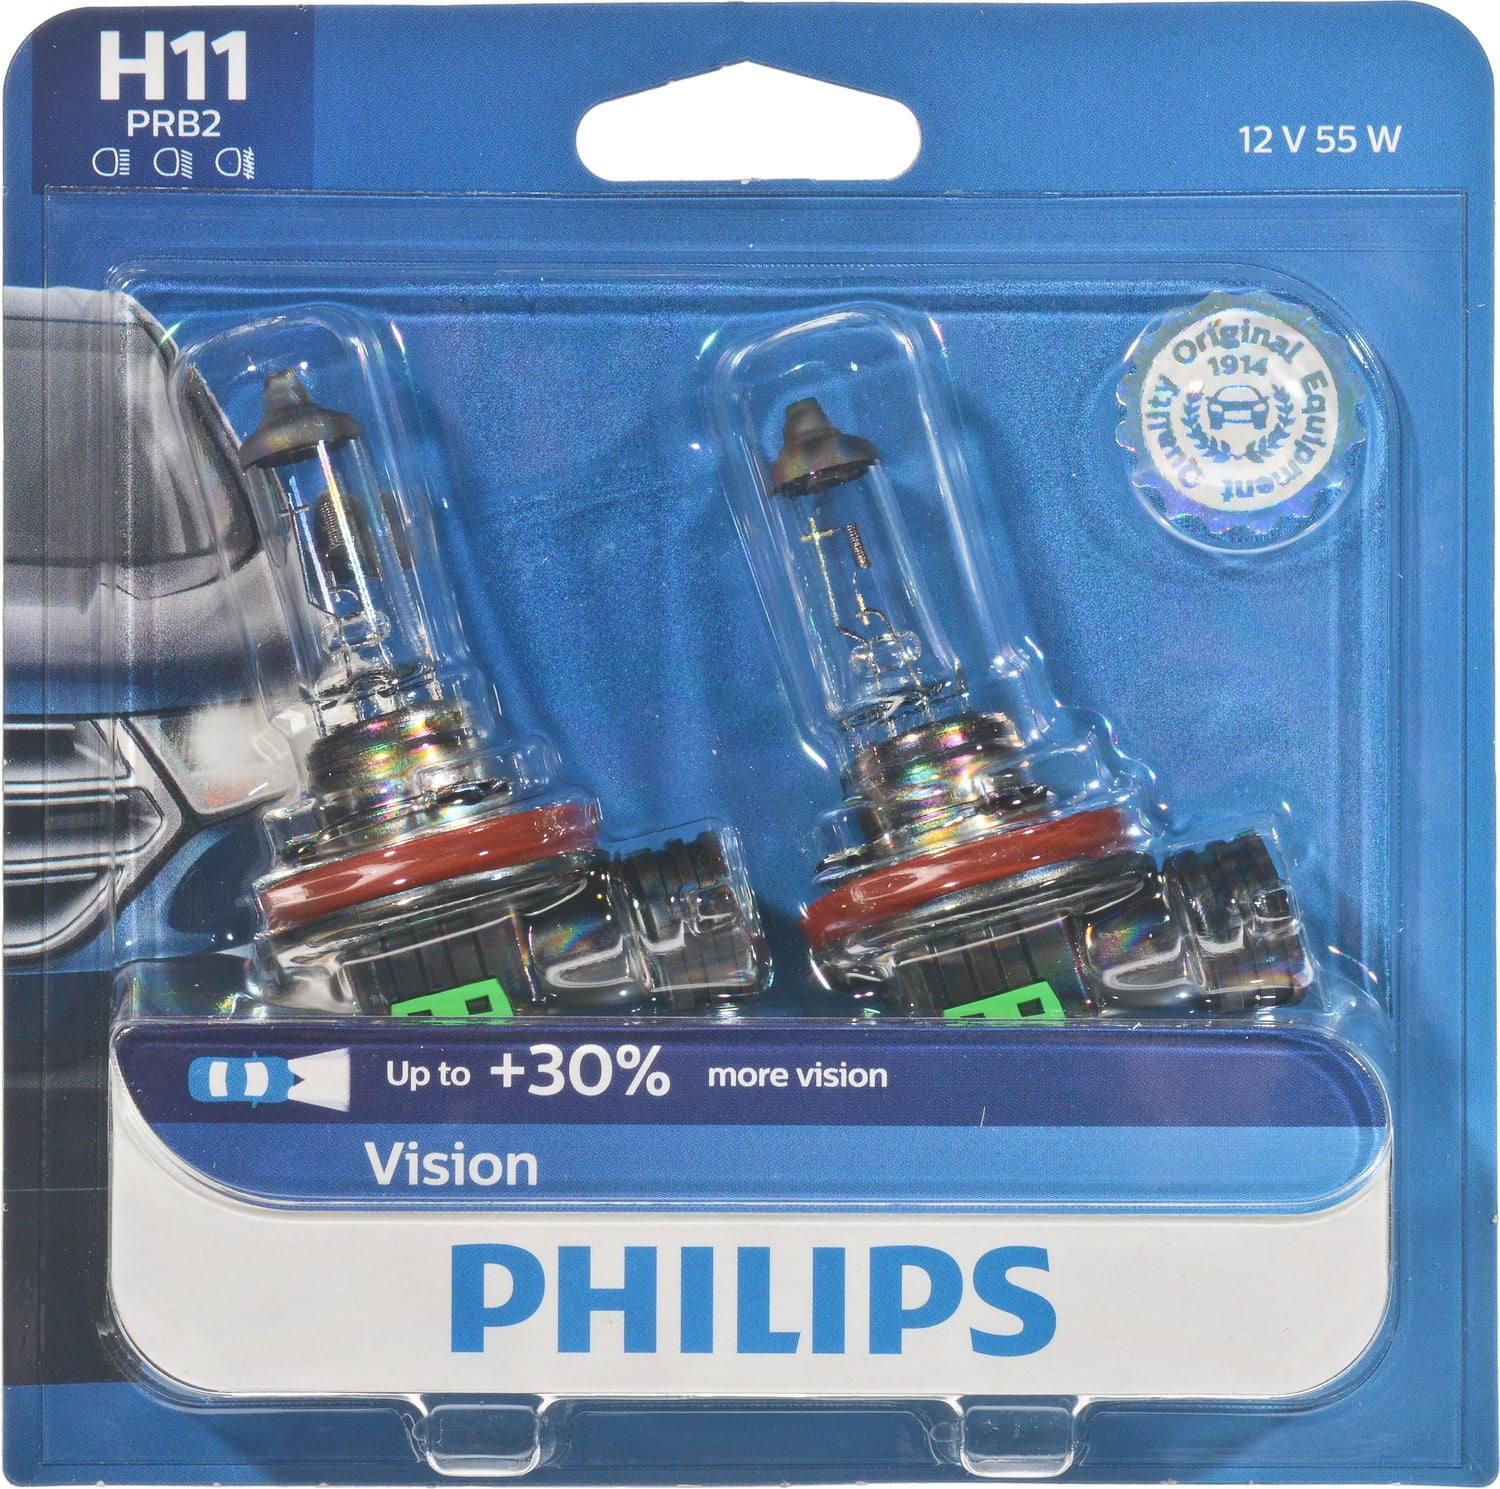 2 pc Philips H11C1 Headlight Bulbs for 31565 94420 Electrical Lighting Body ih 